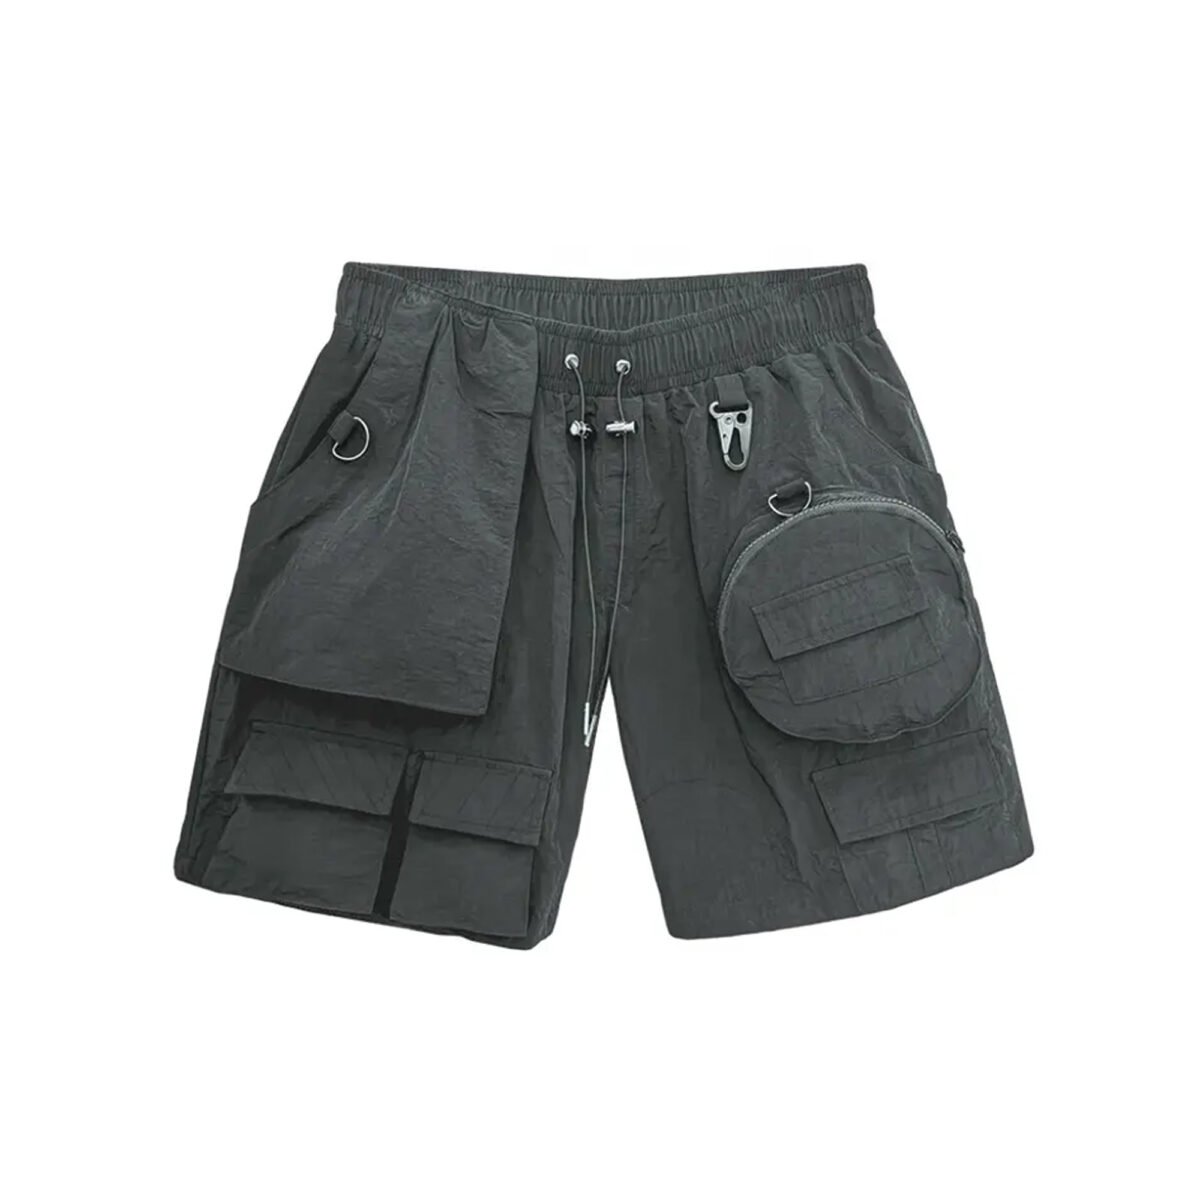 Multi-pocket new design shorts